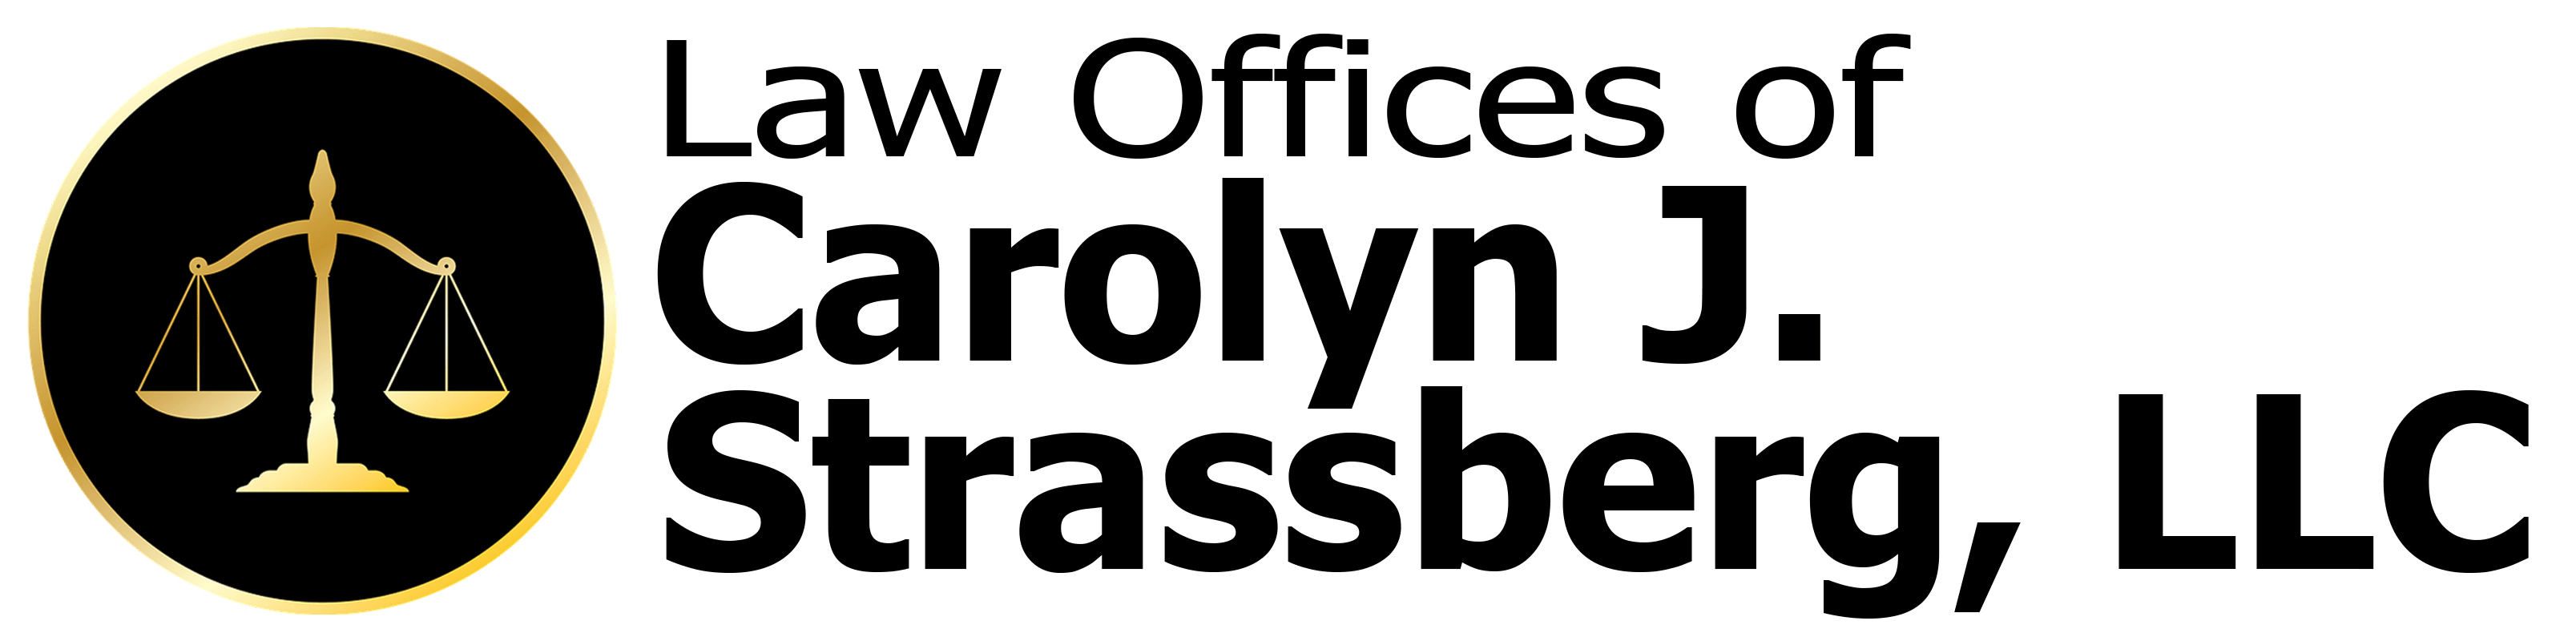 Law Offices of Carolyn J. Strassberg